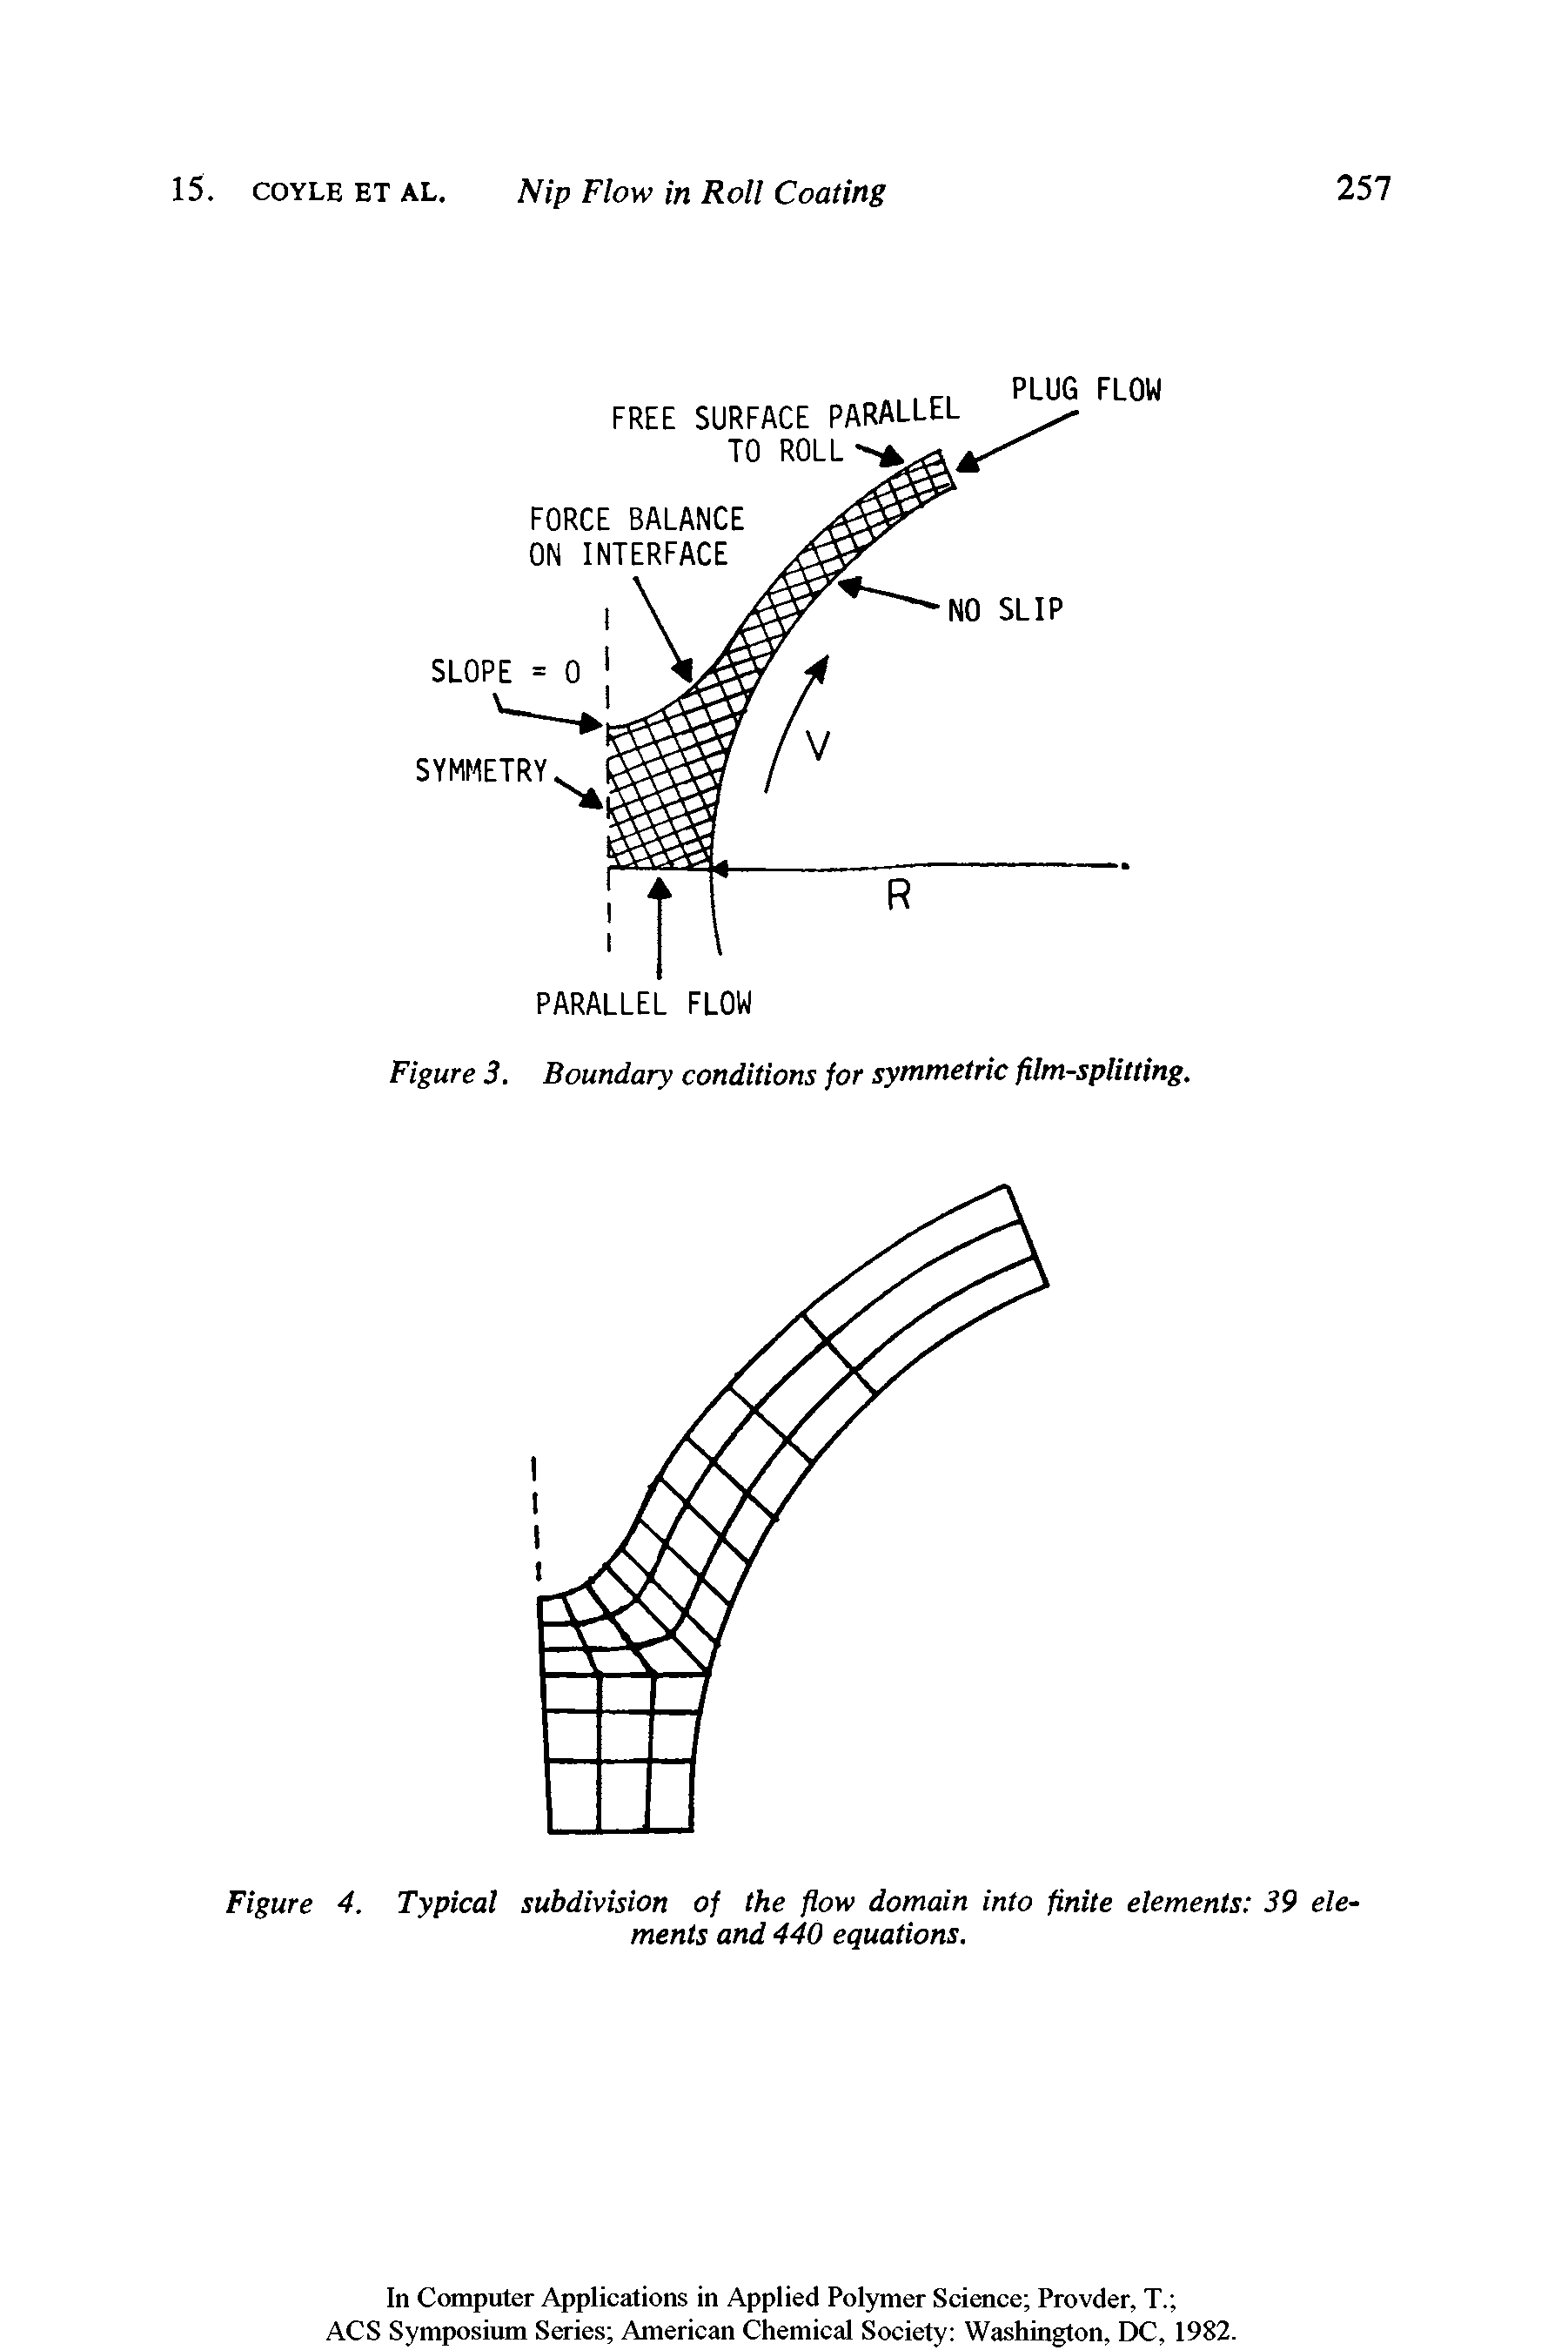 Figure 3. Boundary conditions for symmetric film-splitting.